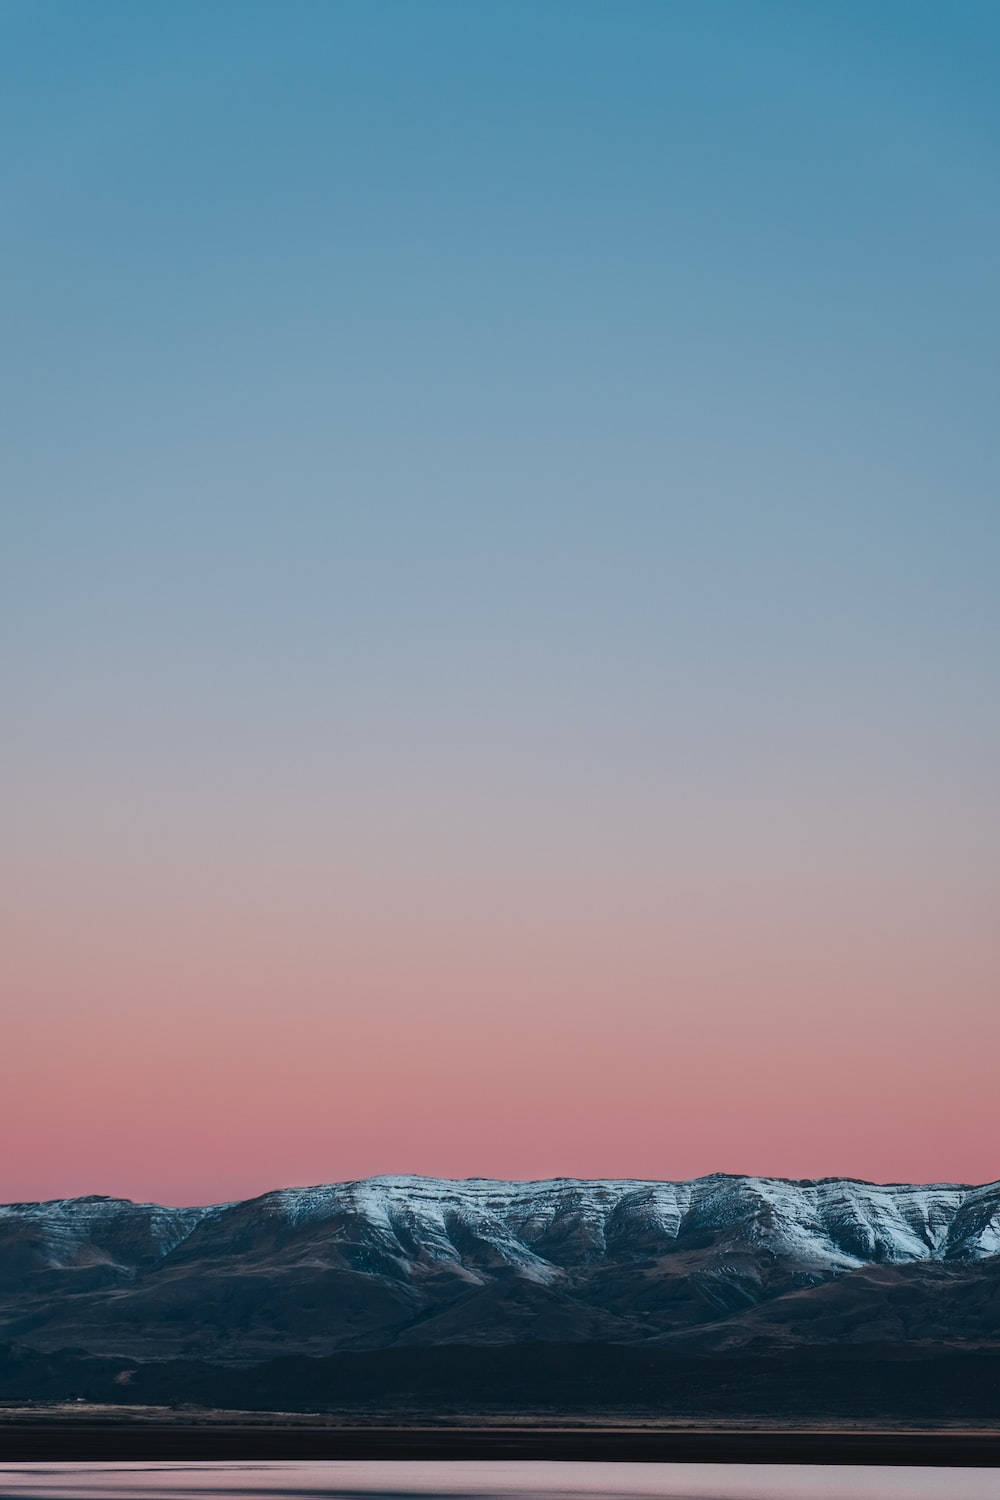 Popular Phone Snowy Mountain Range Background